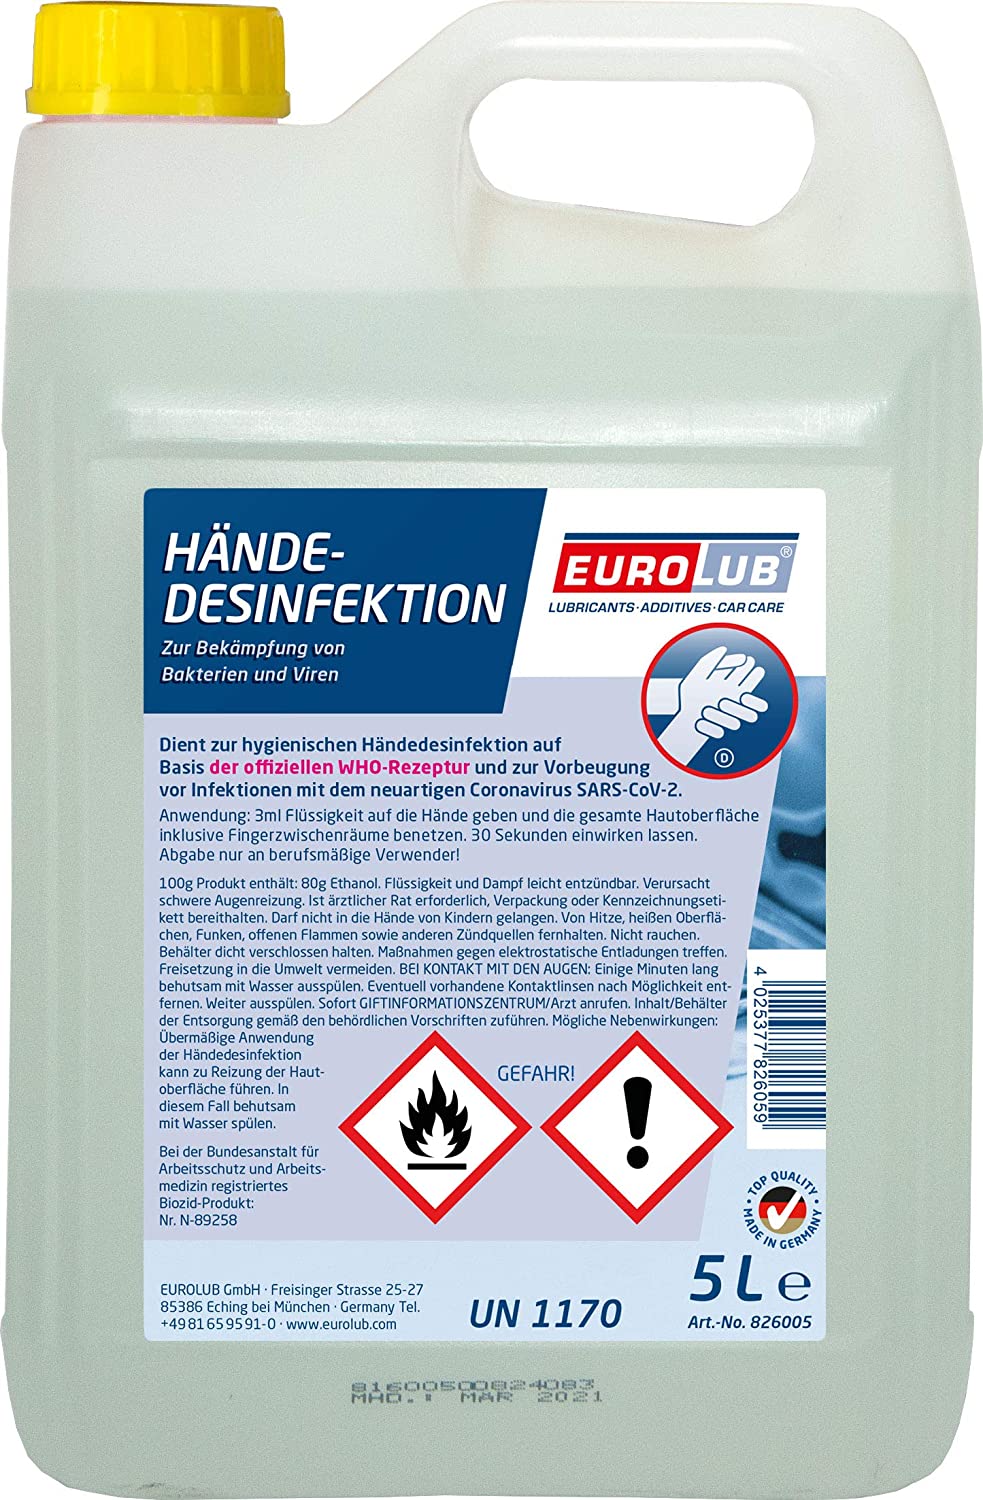 Eurolub Händedesinfektion Desinfektionsmittel Kanister 25 Liter